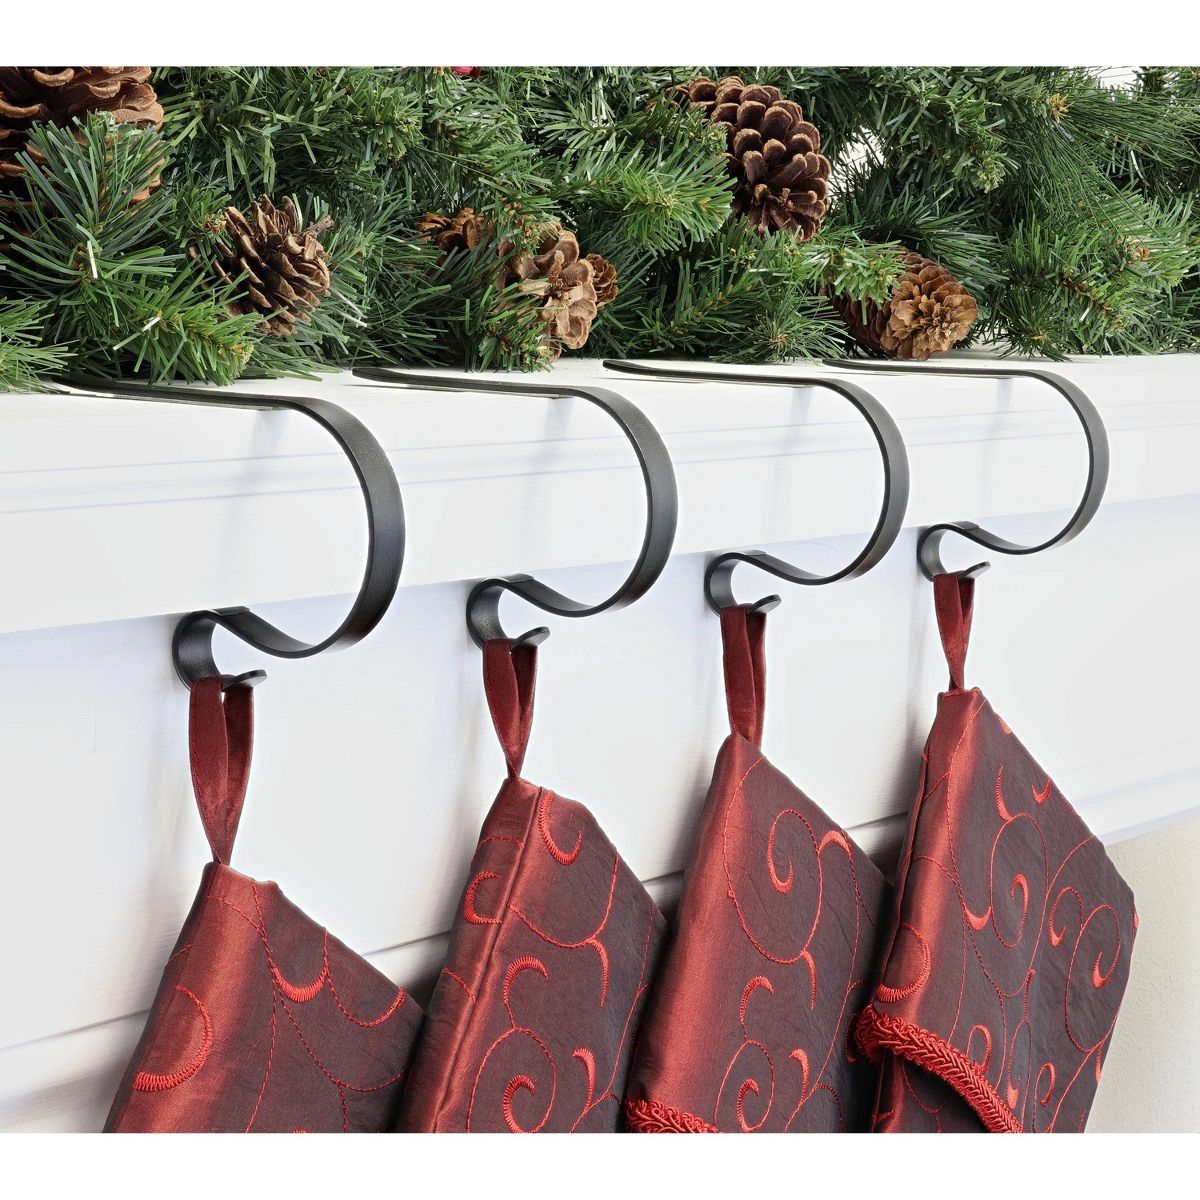 Original MantleClip 4pk Christmas Stocking Holder | Target